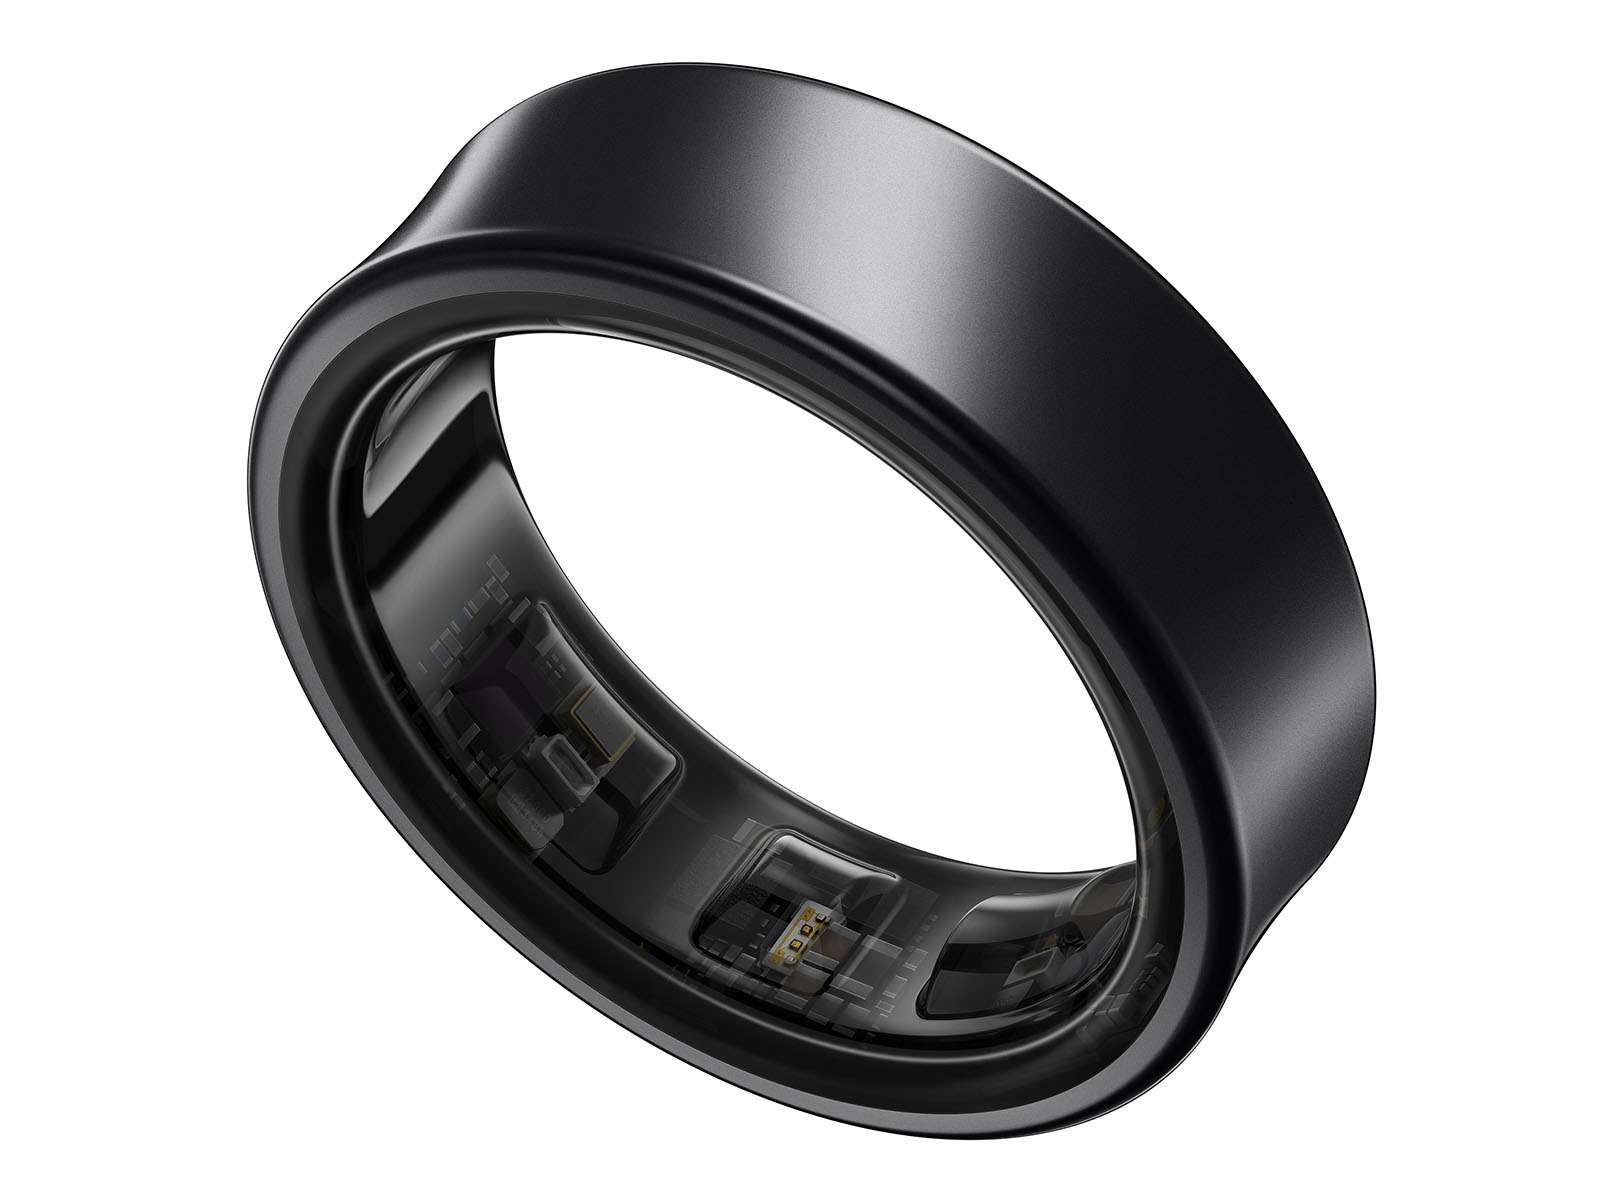 Thumbnail image of Galaxy Ring, Size 11, Titanium Black